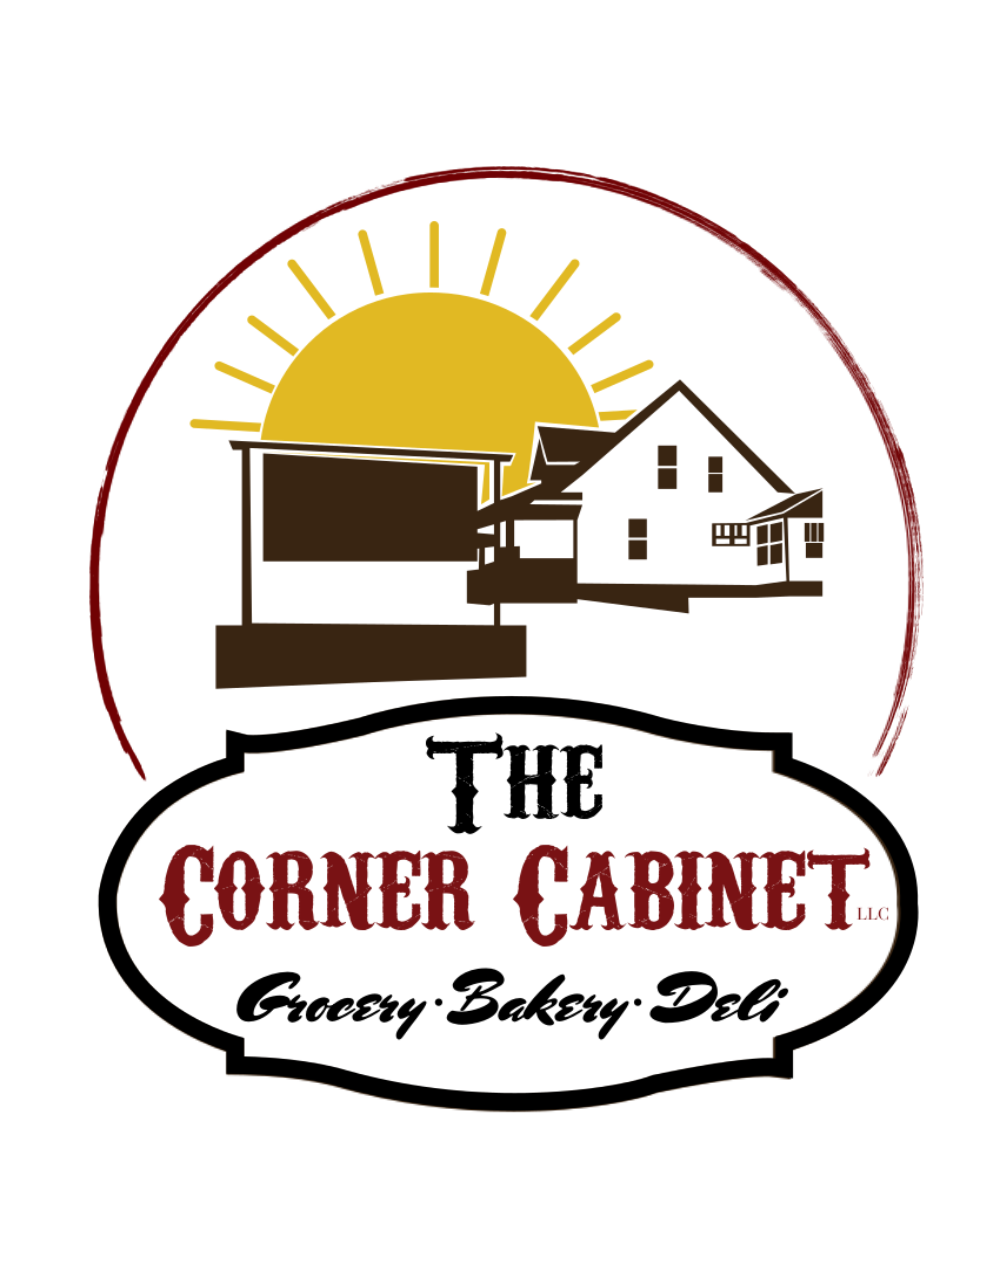 The Corner Cabinet, LLC